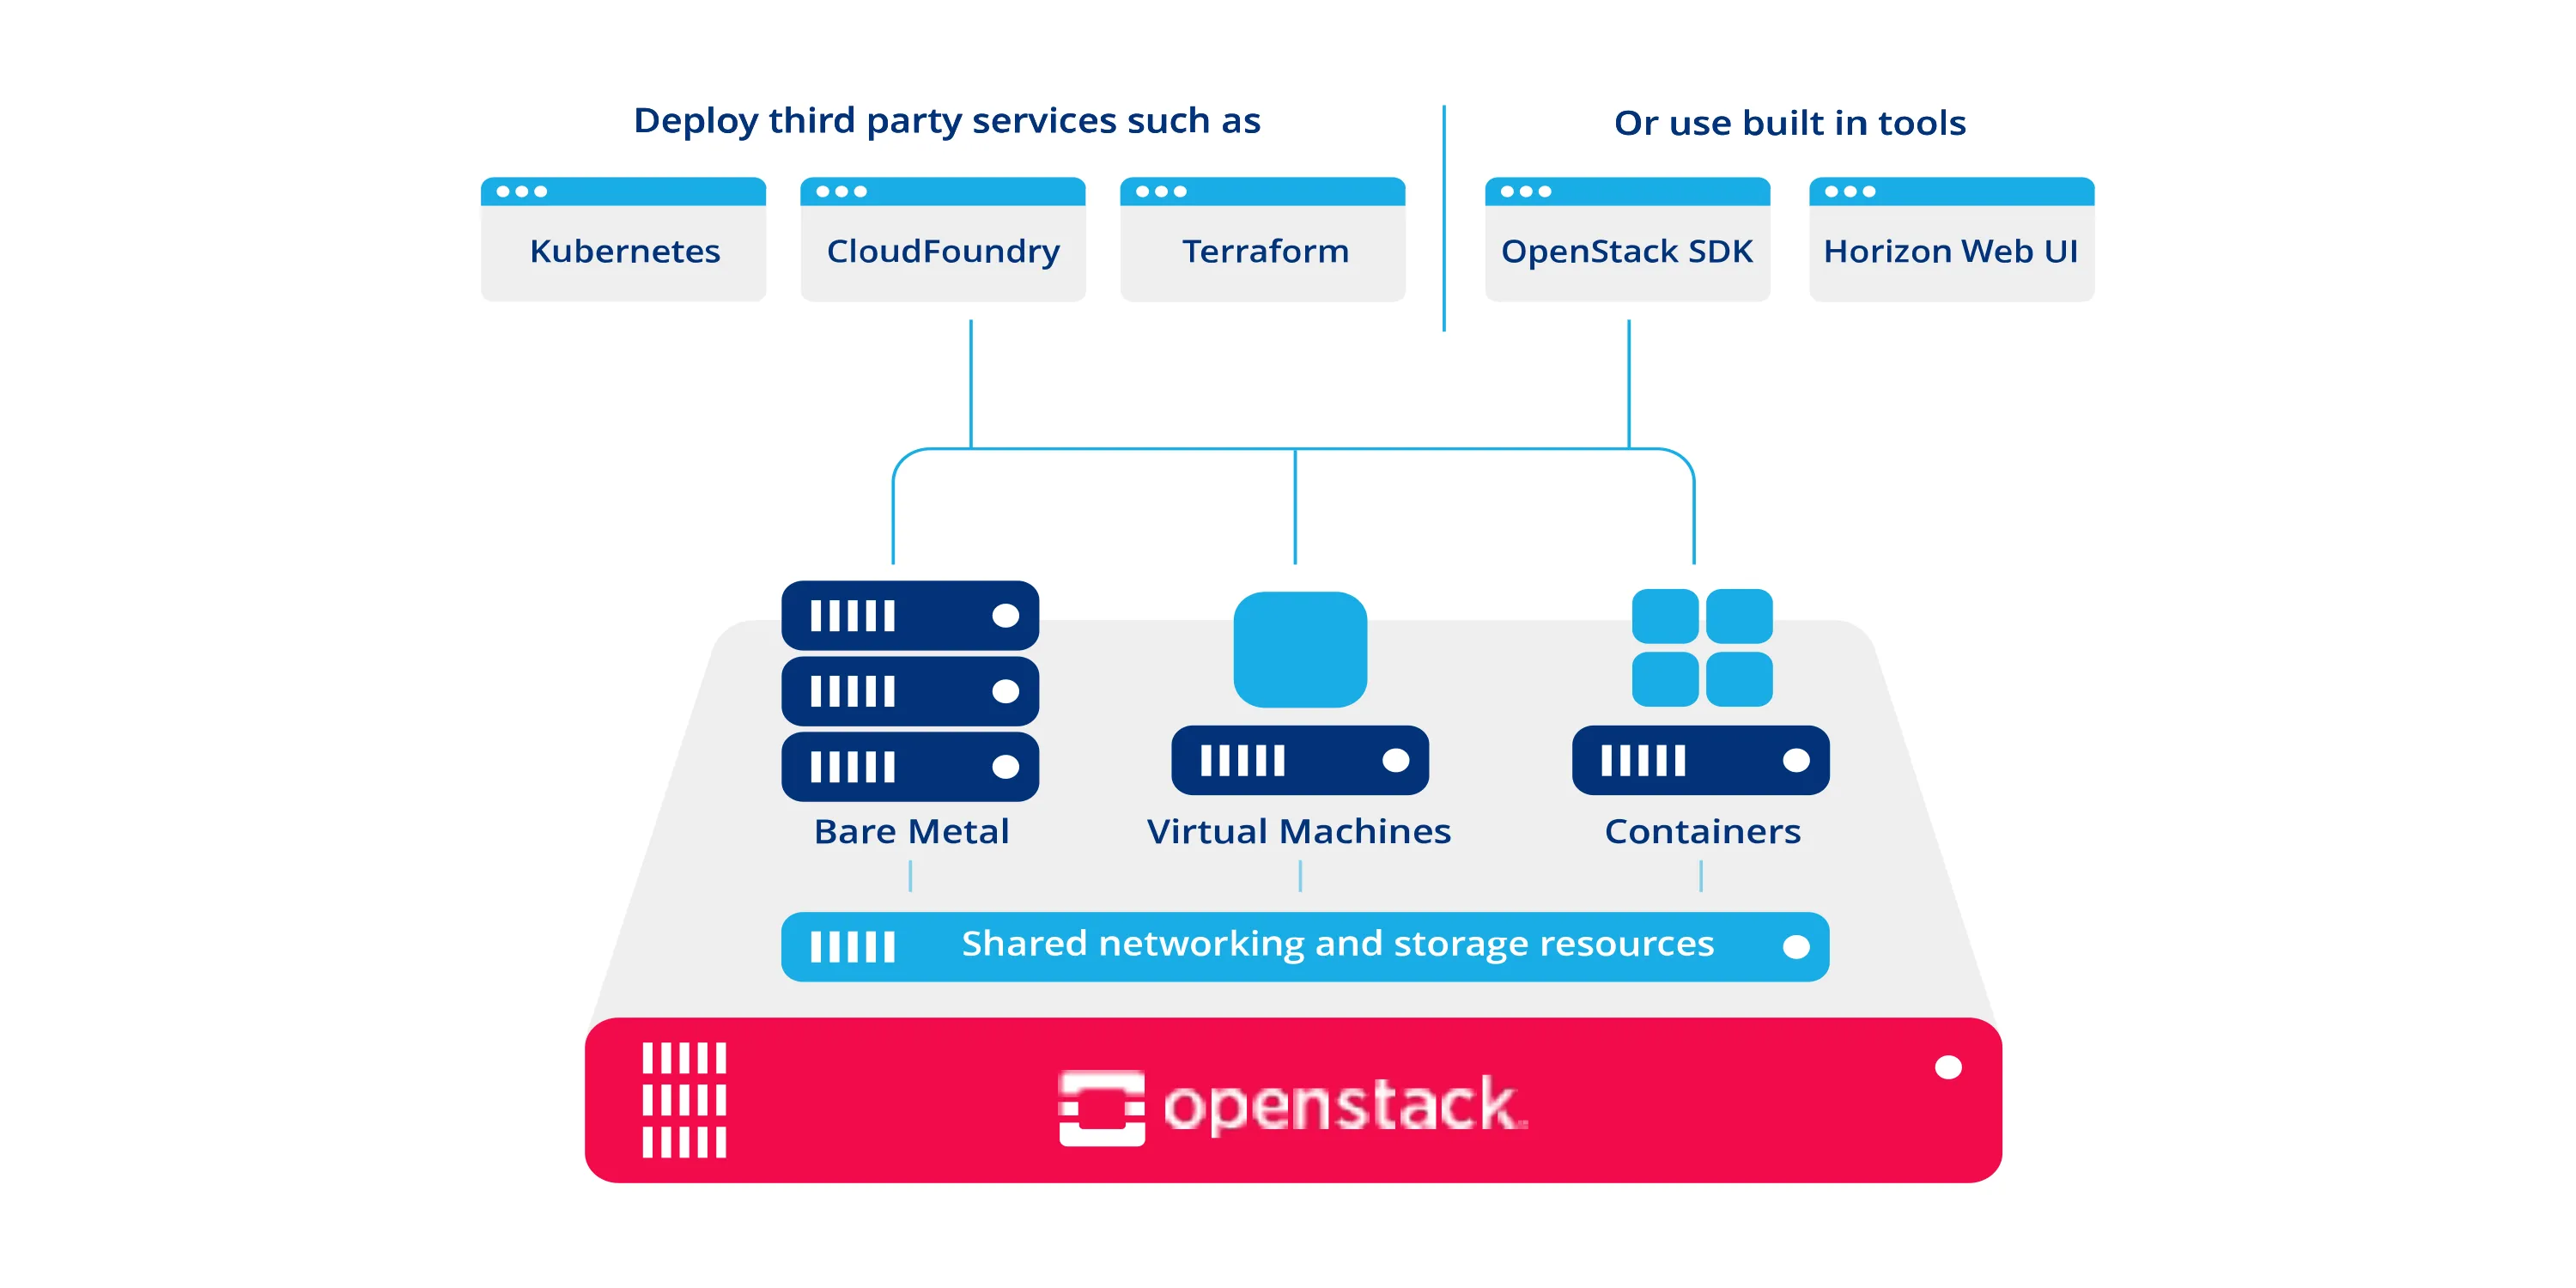 OpenStack Overview